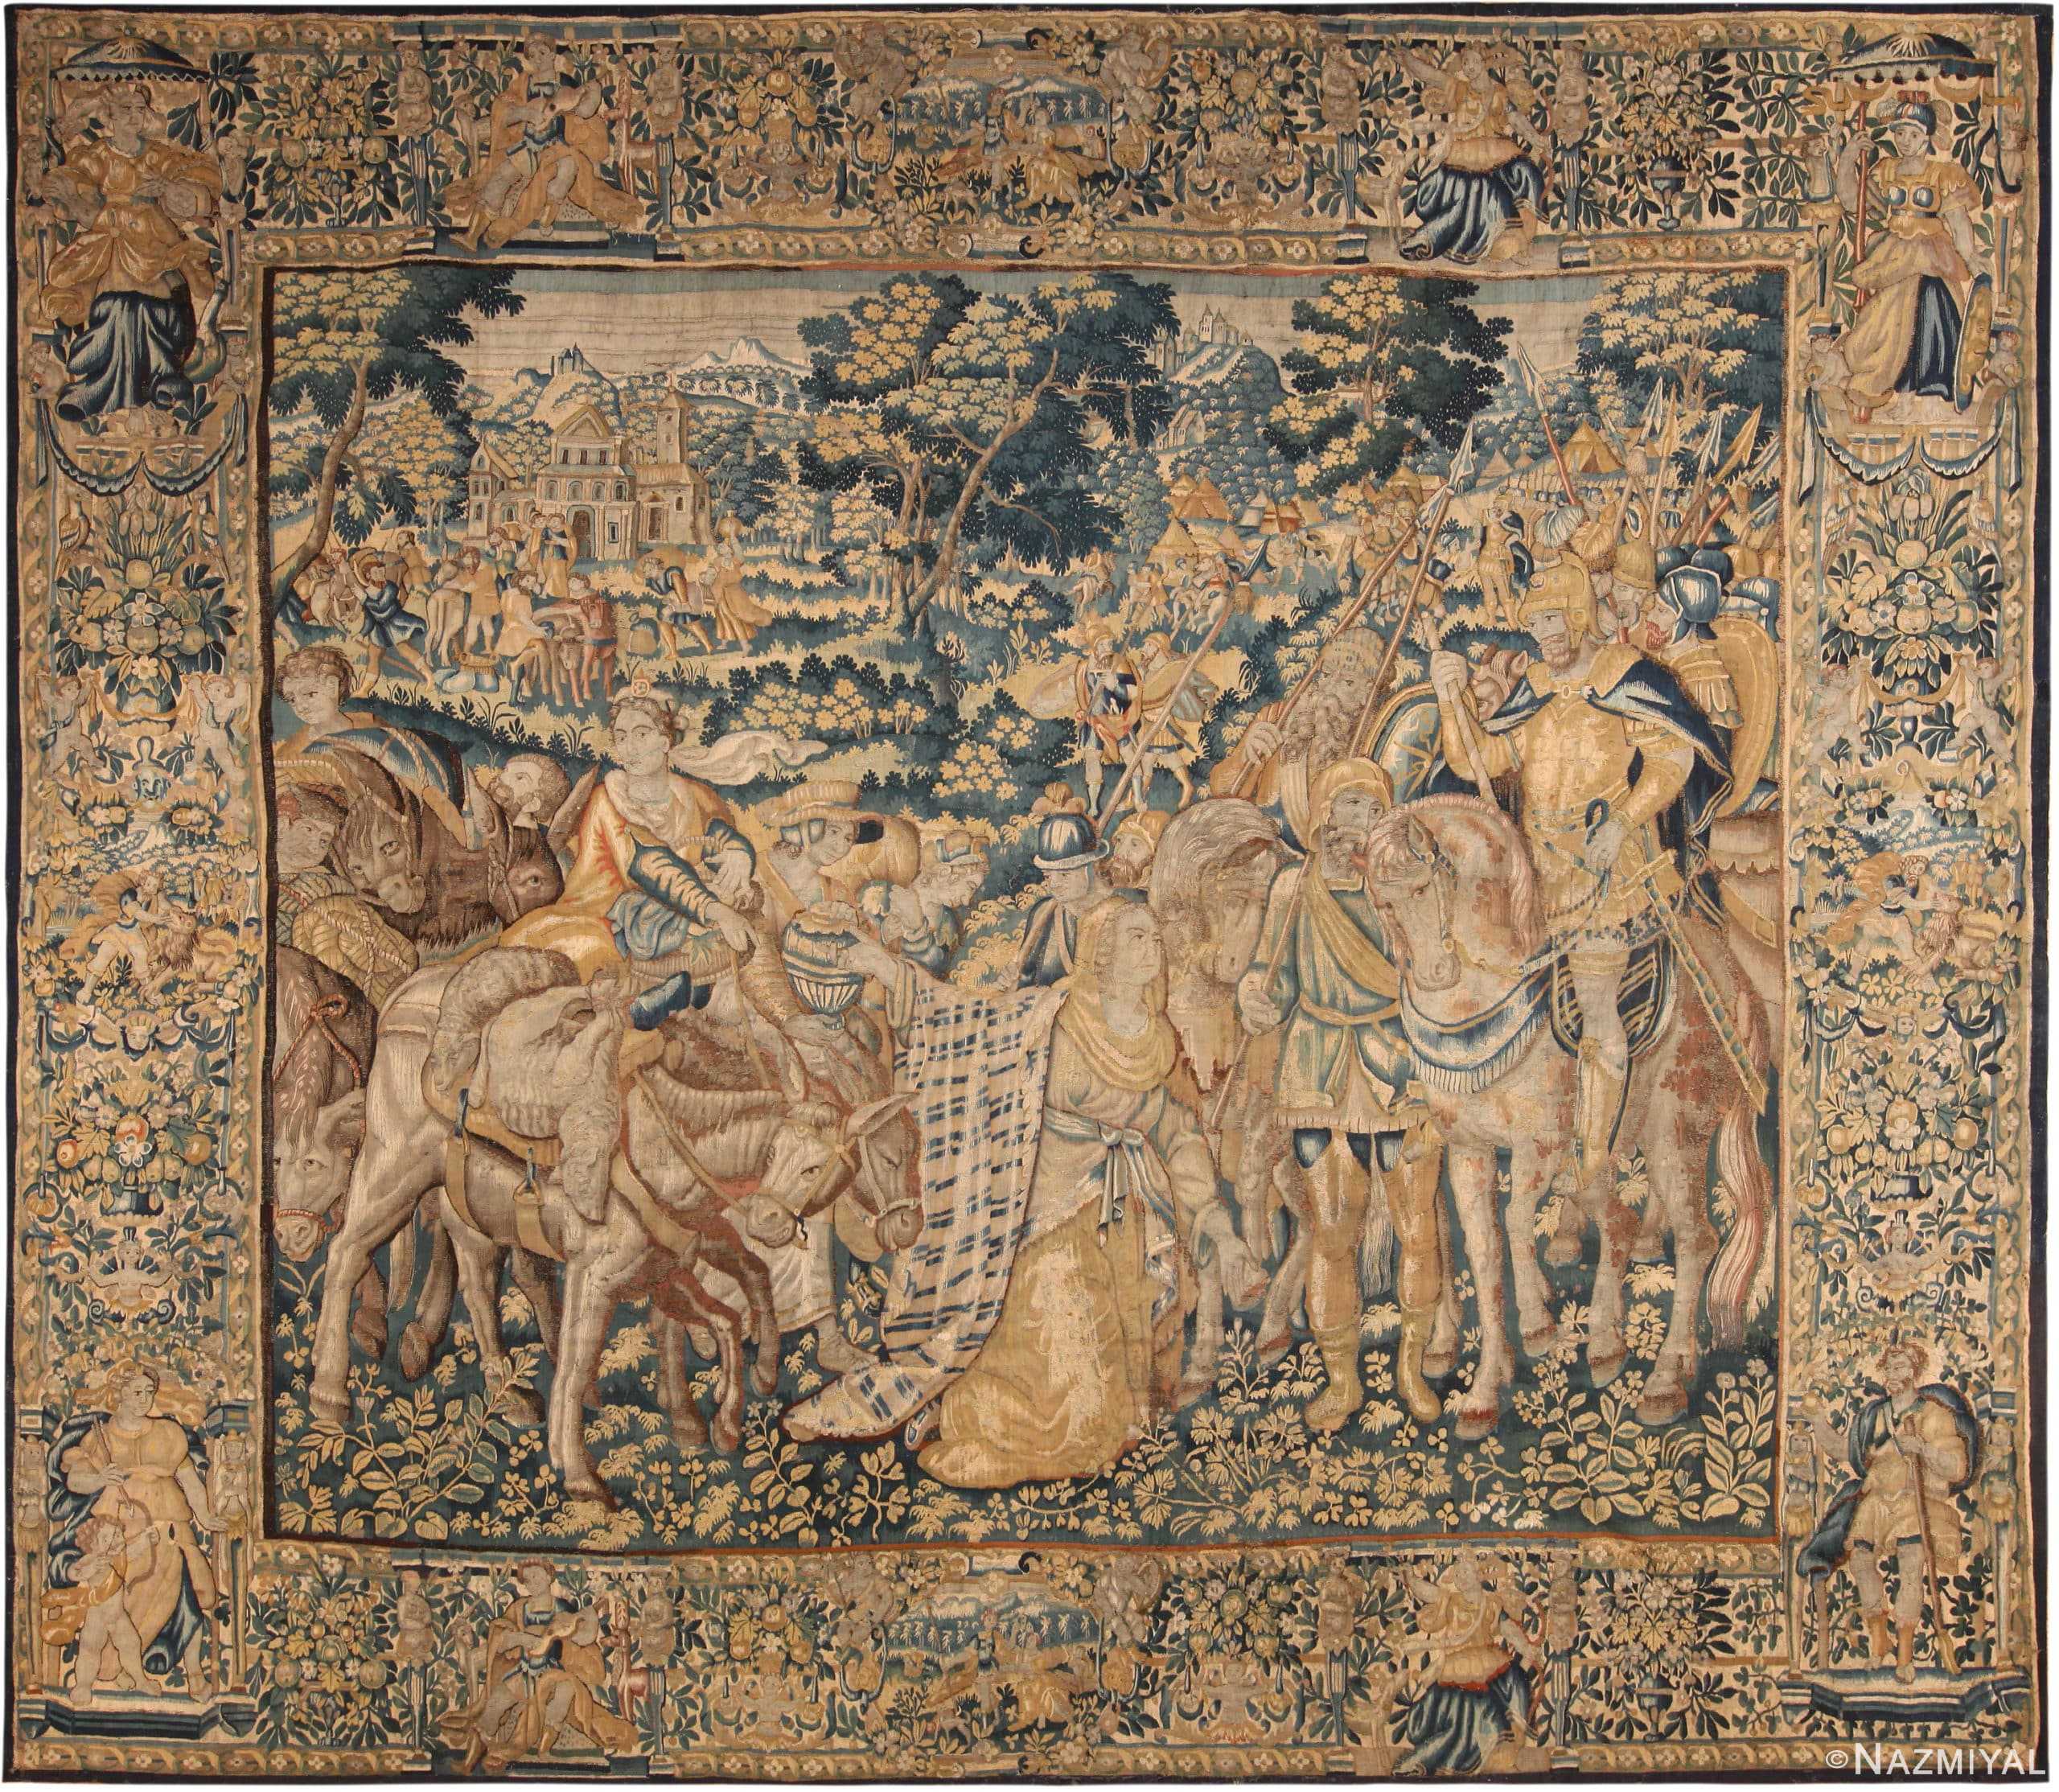 https://cdn.nazmiyalantiquerugs.com/wp-content/uploads/2023/02/watermark/16th-century-antique-flemish-king-solomon-silk-and-wool-tapestry-72007-nazmiyal.jpg